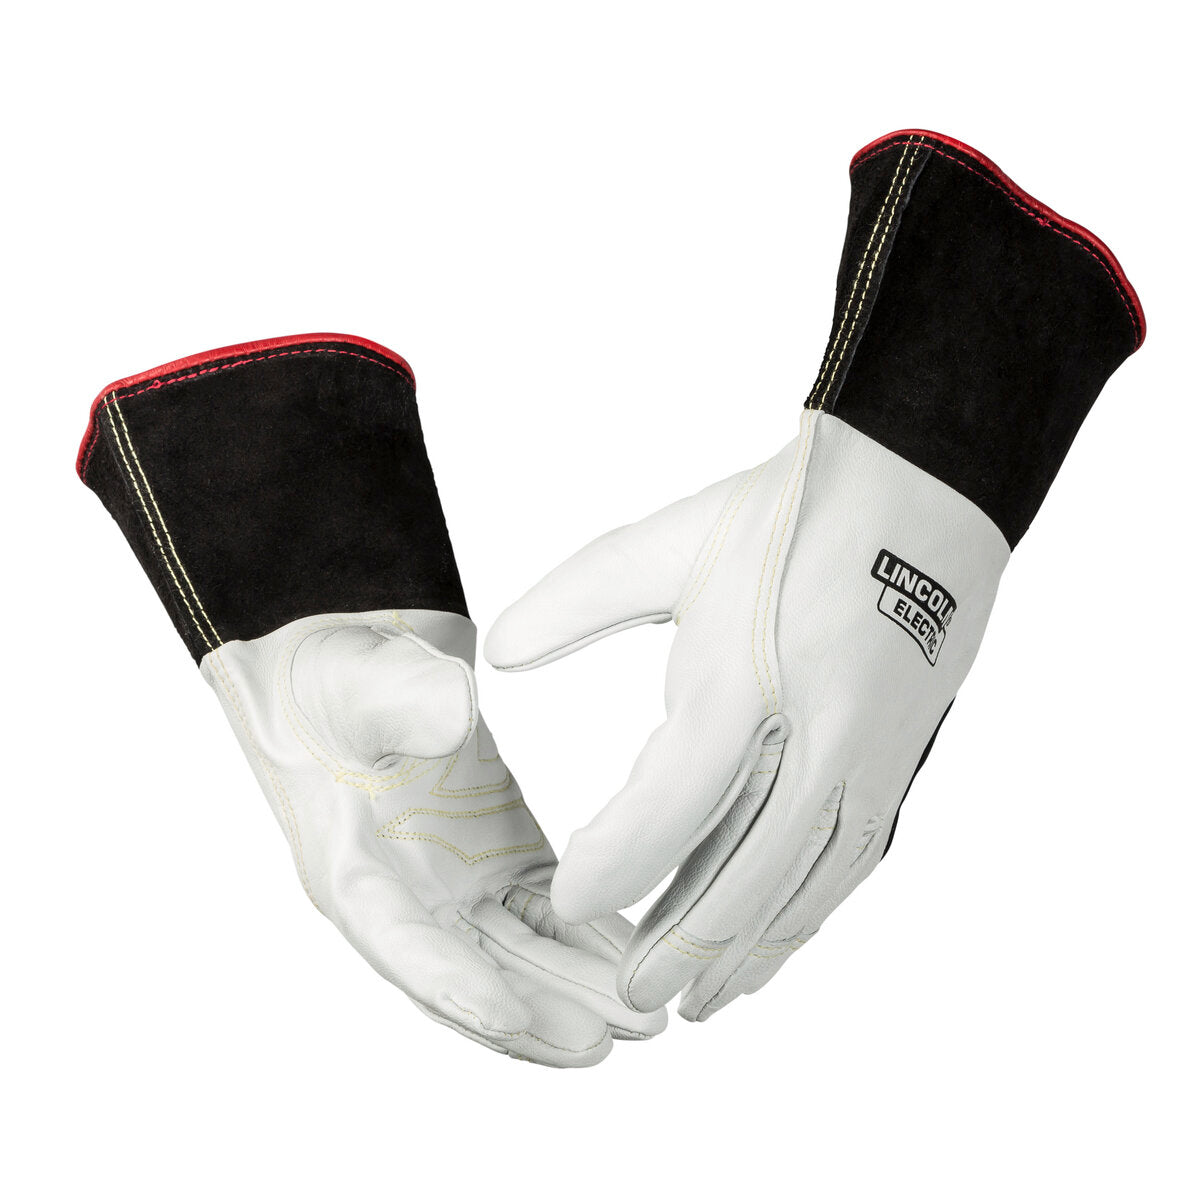 Lincoln Electric K2983-M Premium Leather TIG Welding Gloves - Medium